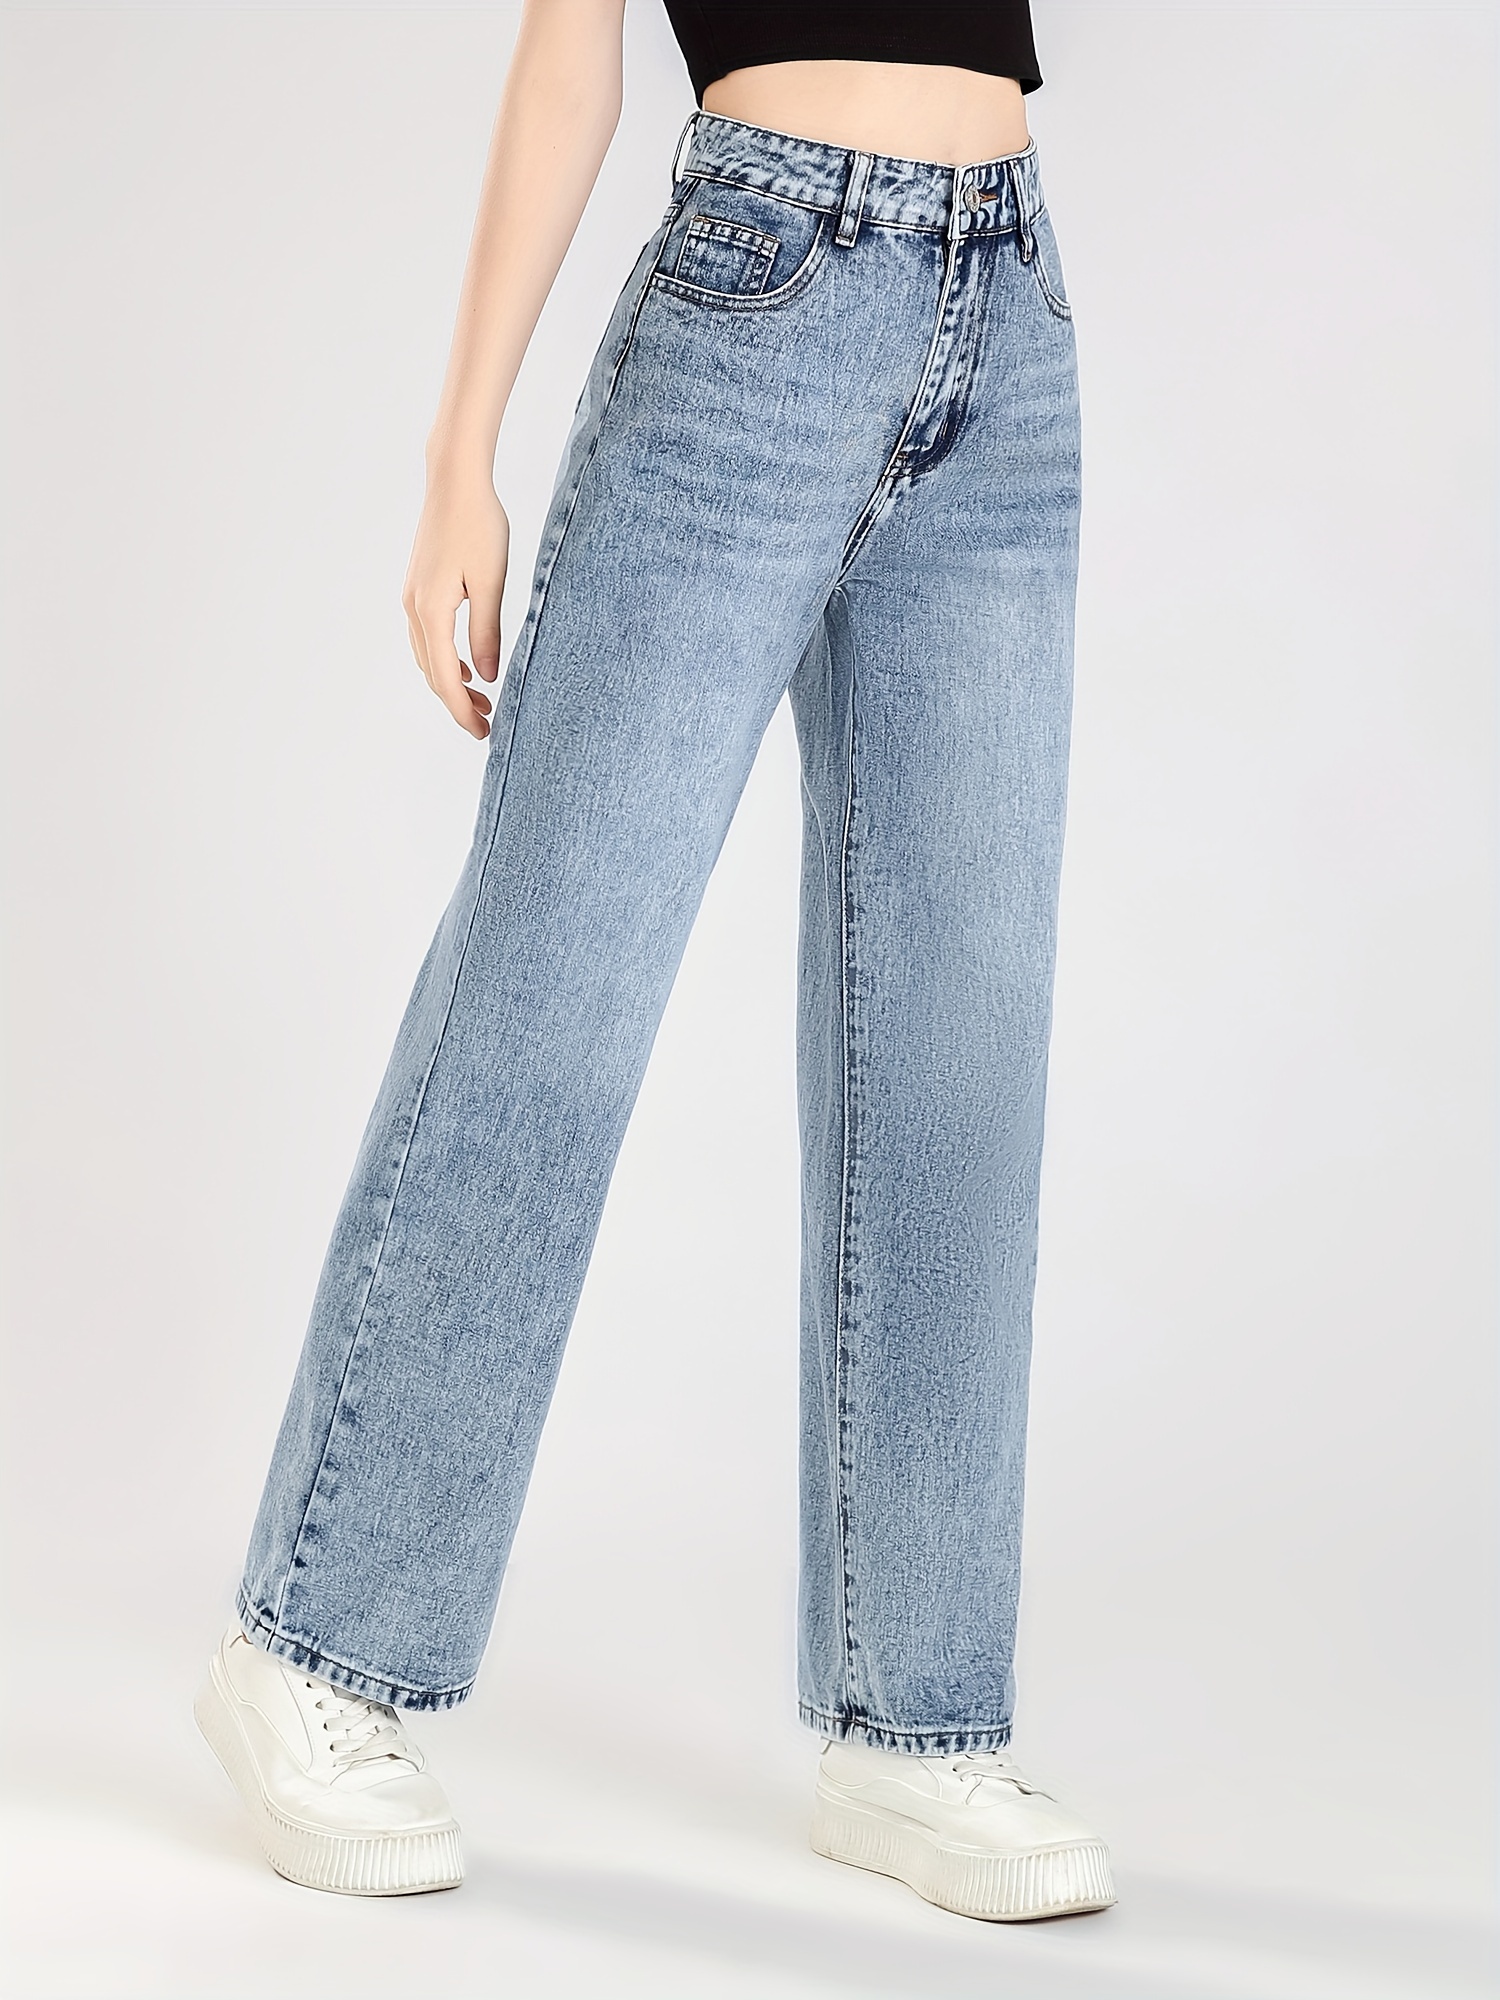 High Waist Baggy Jeans Girls Fashion Comfy Casual Straight Leg